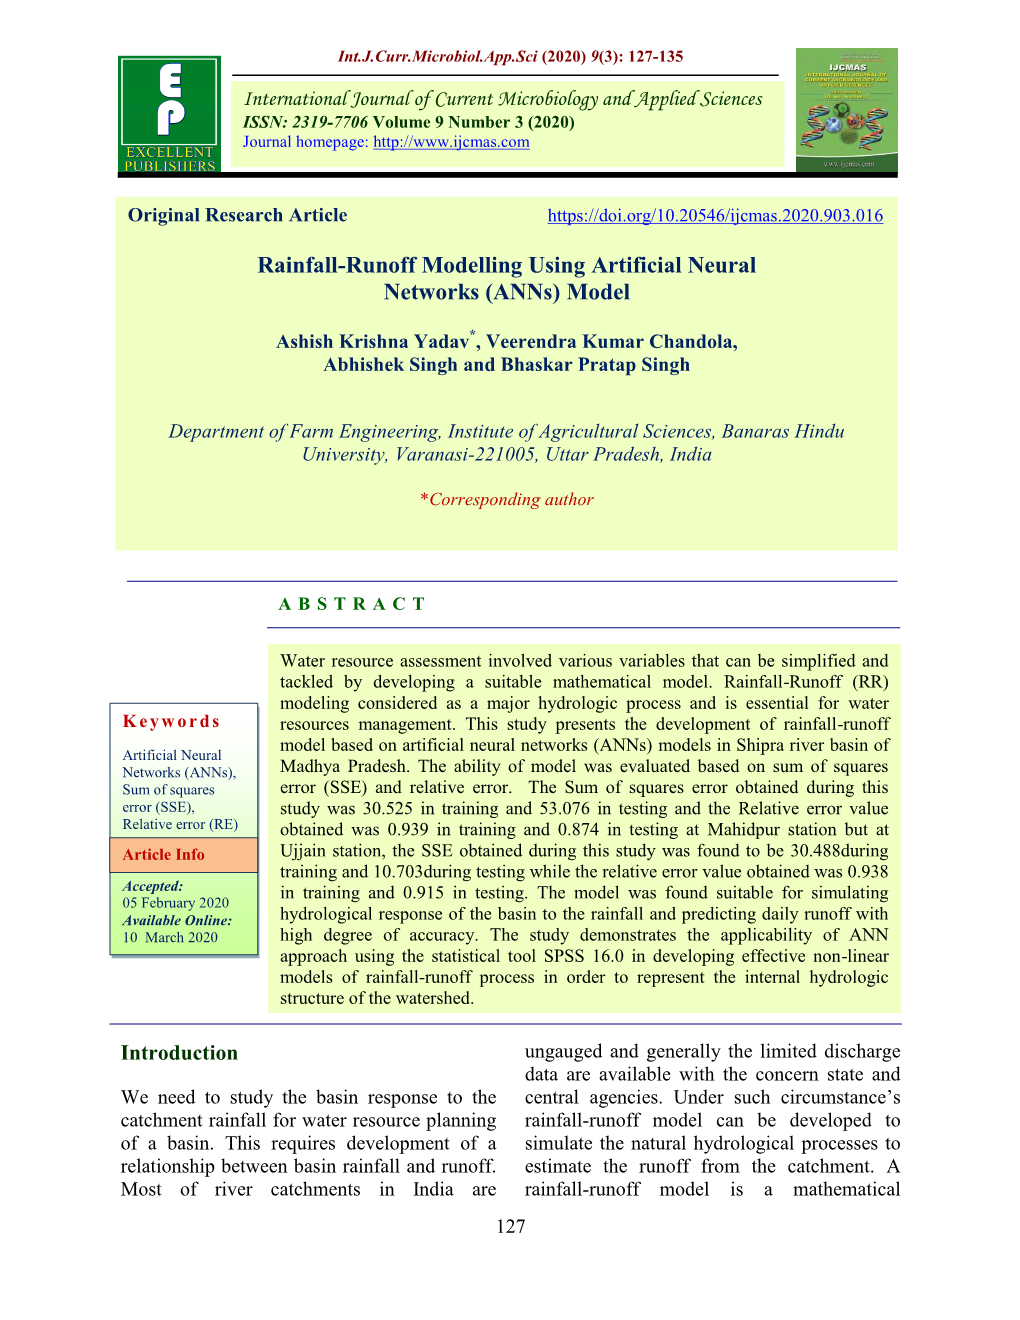 Rainfall-Runoff Modelling Using Artificial Neural Networks (Anns) Model